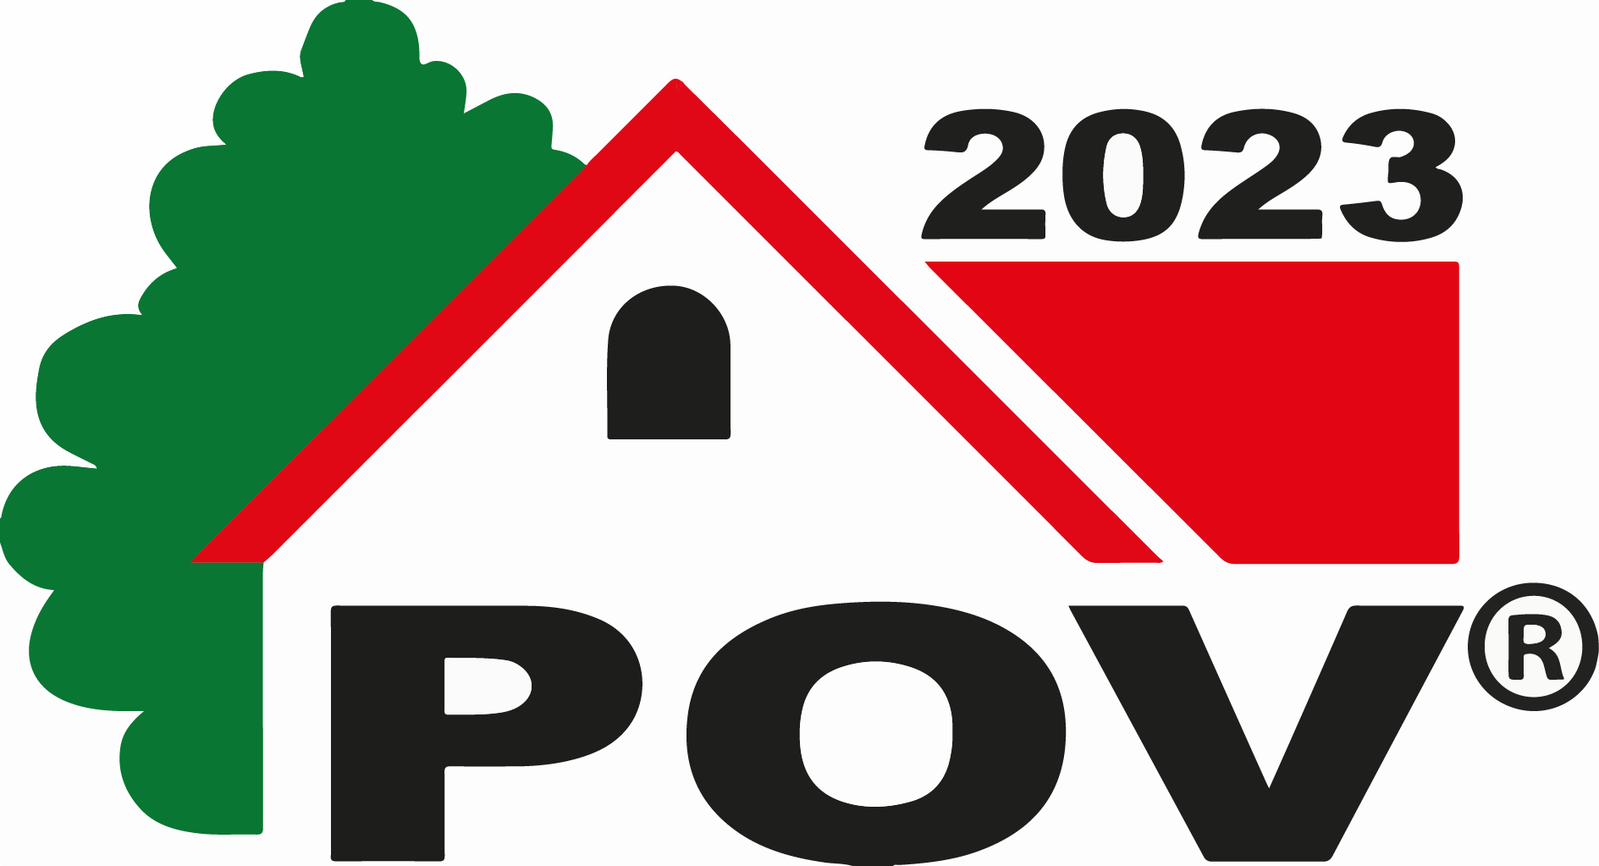 logopov-2023-2 (3).png